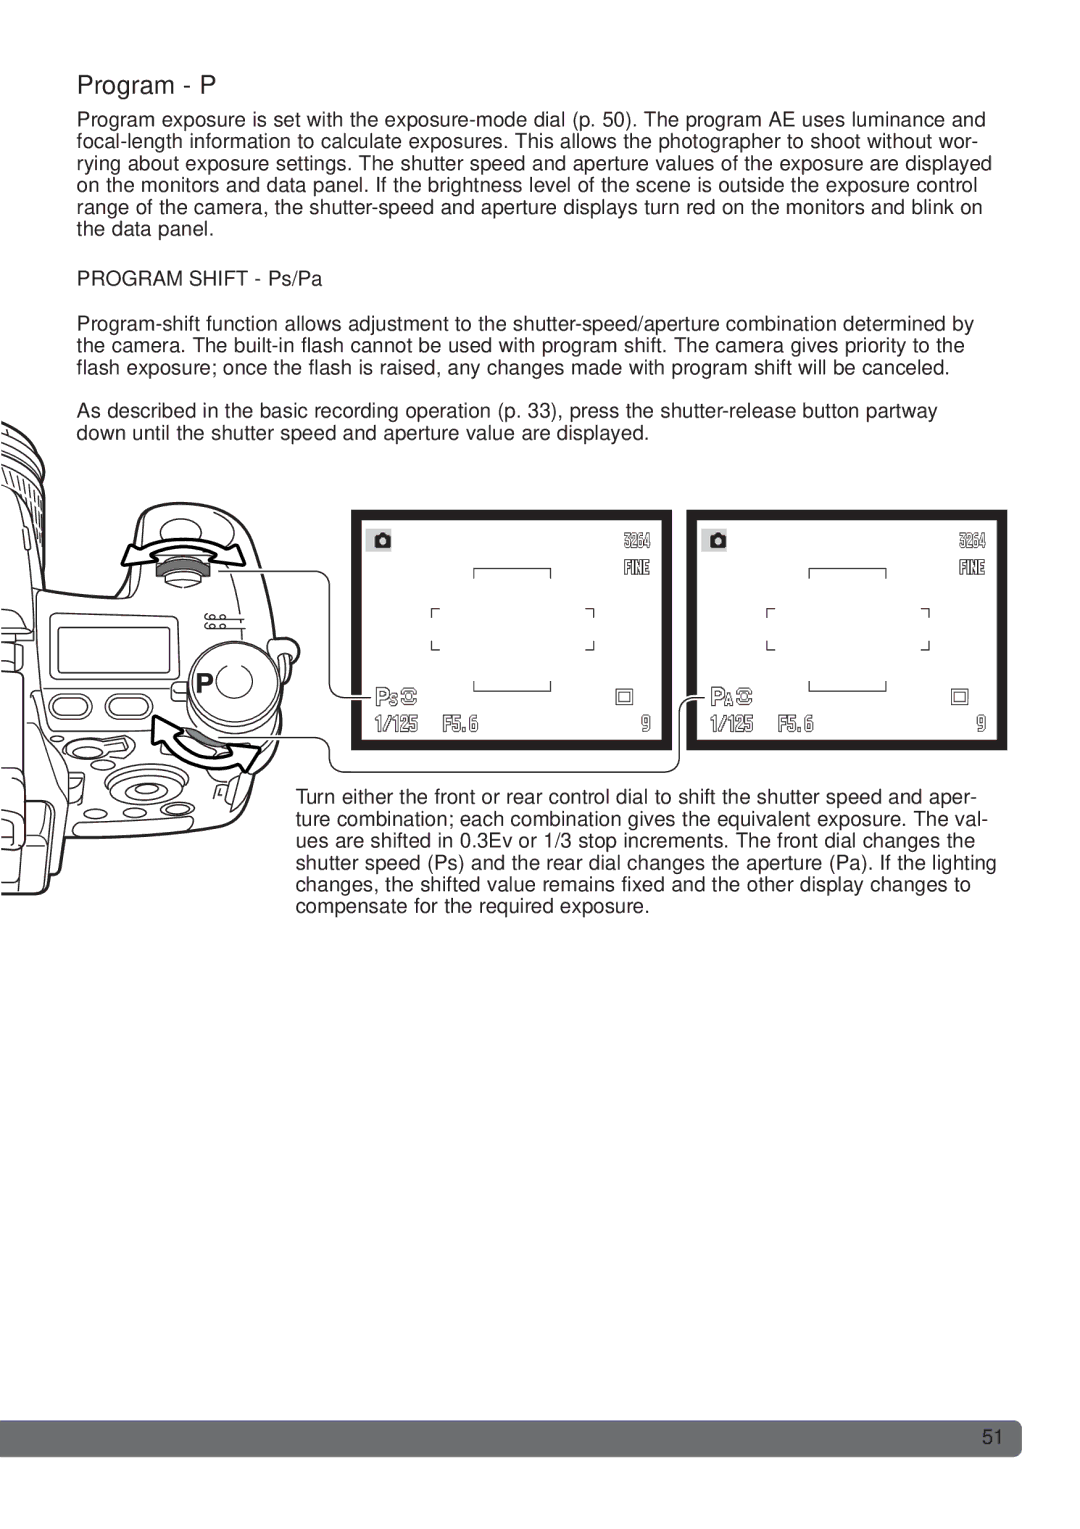 Konica Minolta DiMAGE_A2 instruction manual Program P, Program Shift Ps/Pa 